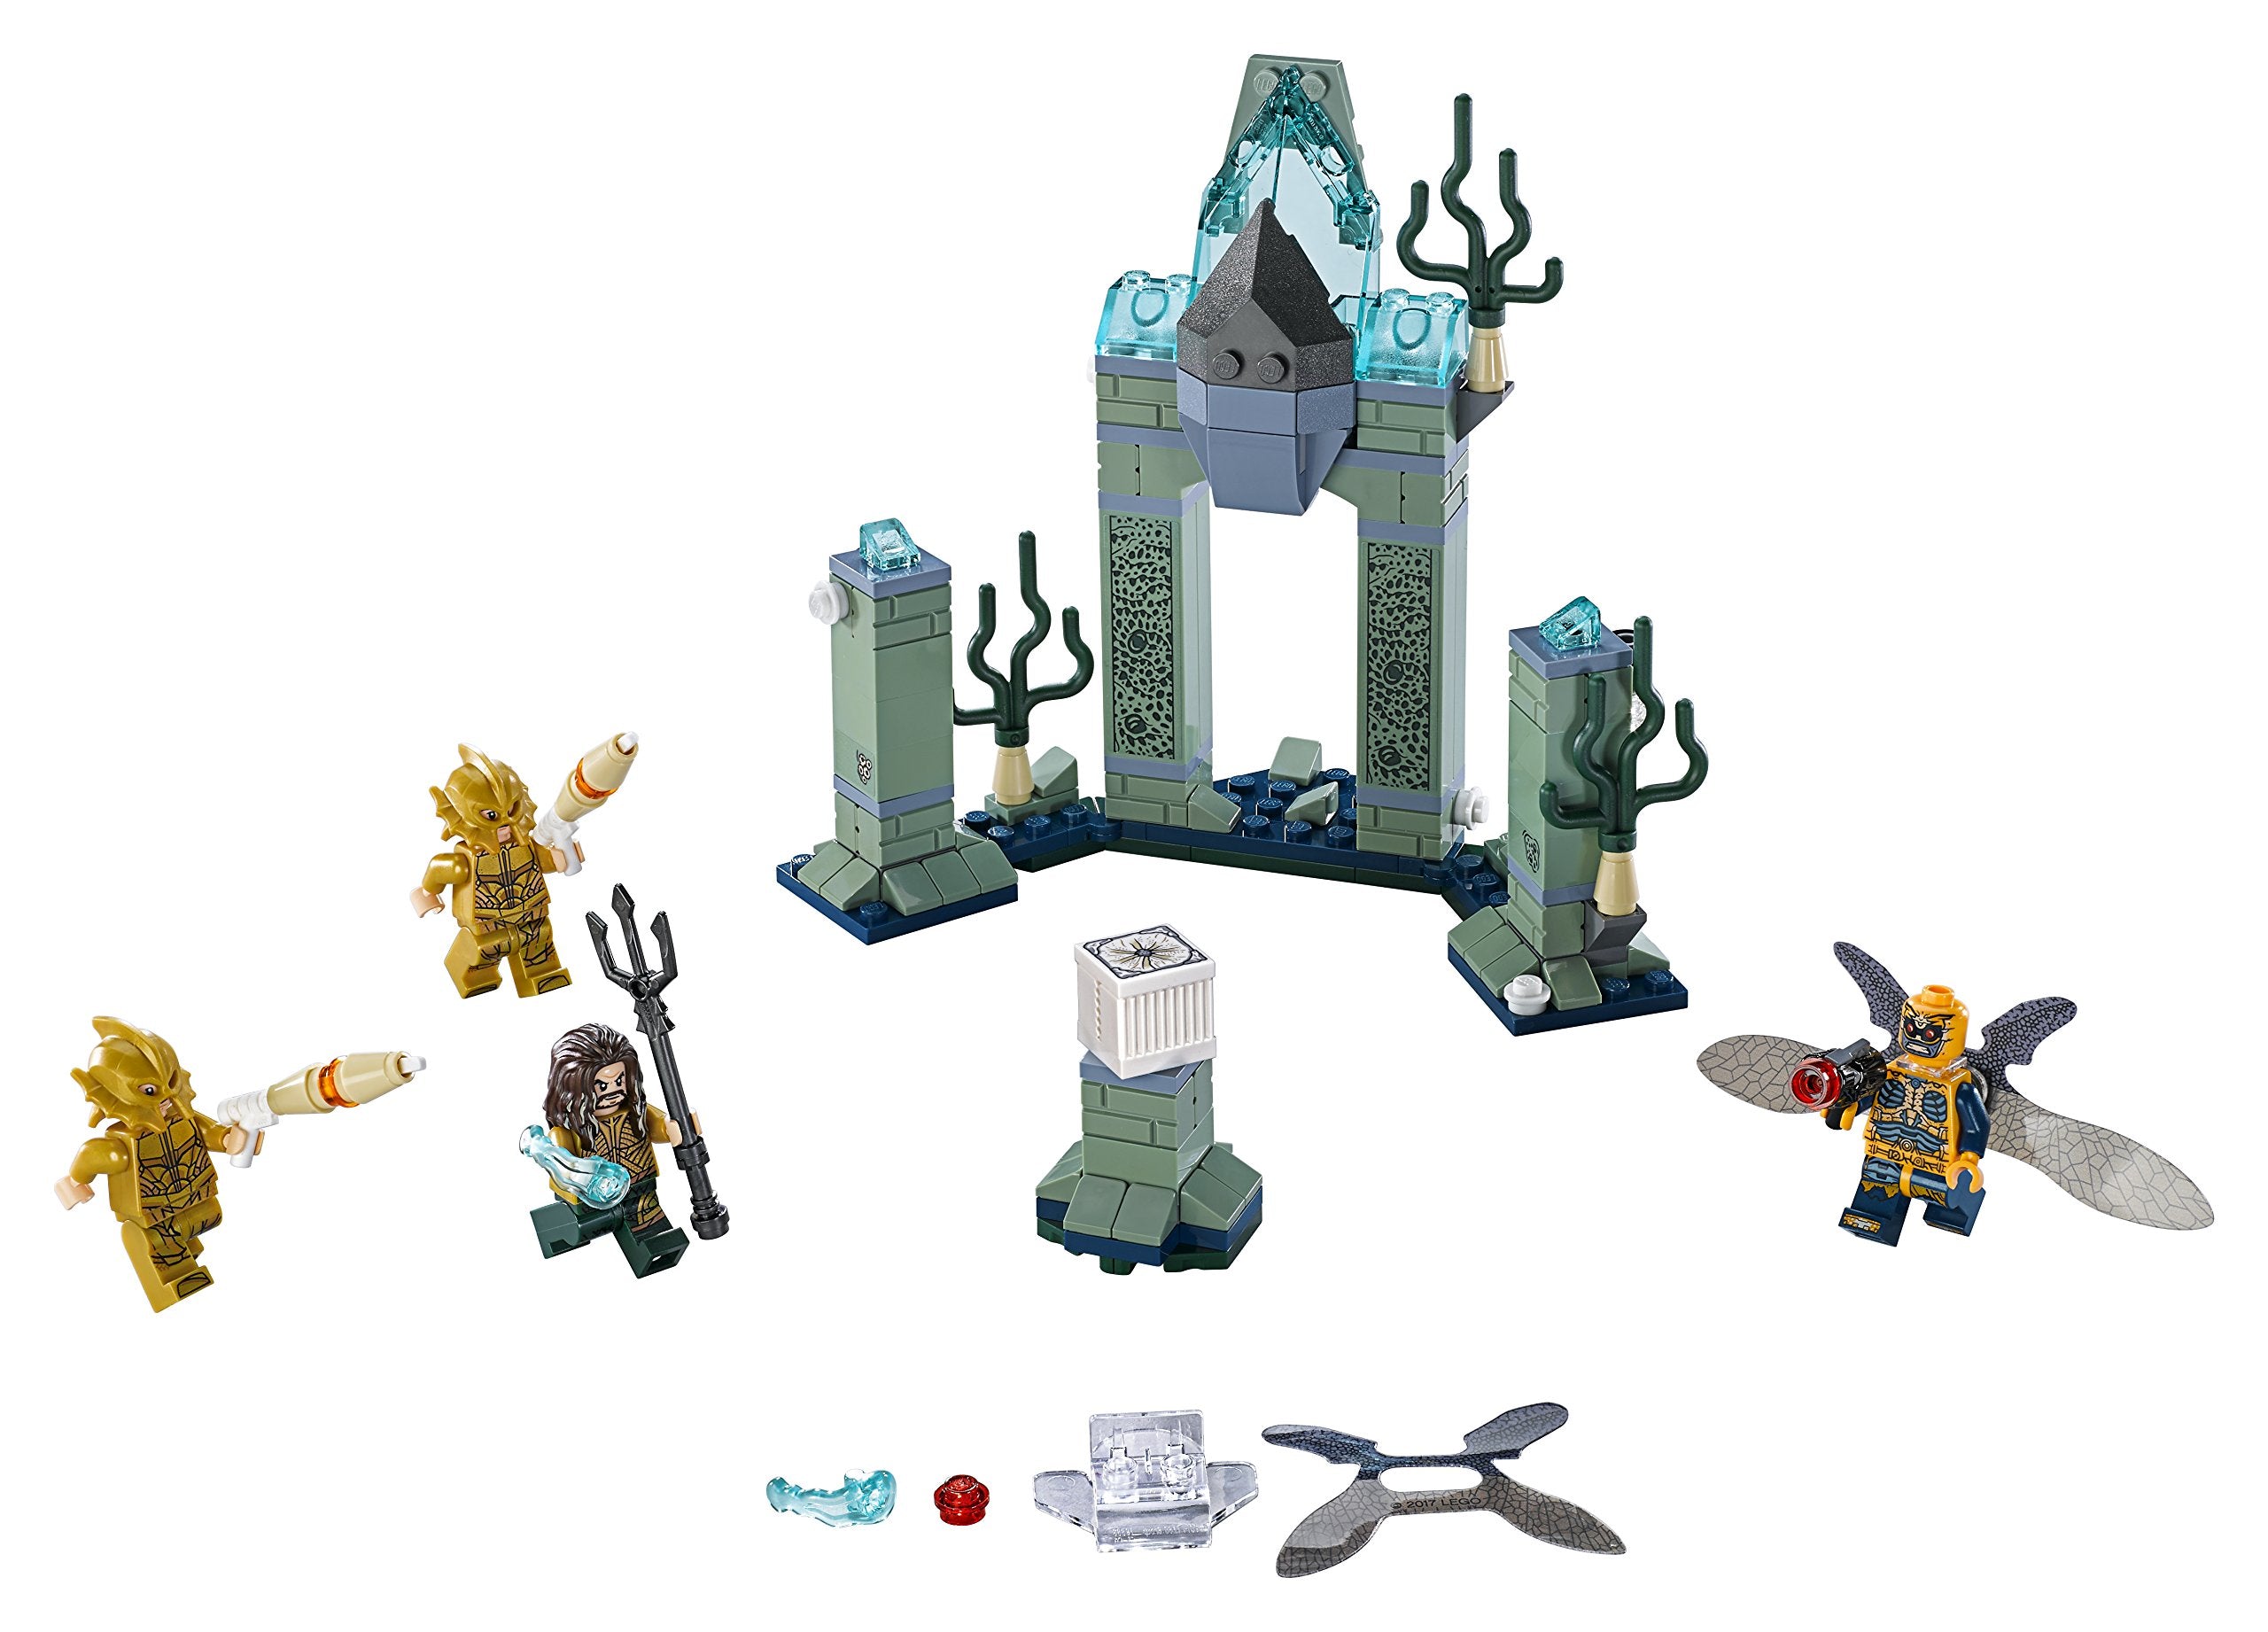 LEGO Super Heroes 76085 Battle of Atlantis (197 Piece) (Like New, Open Box)